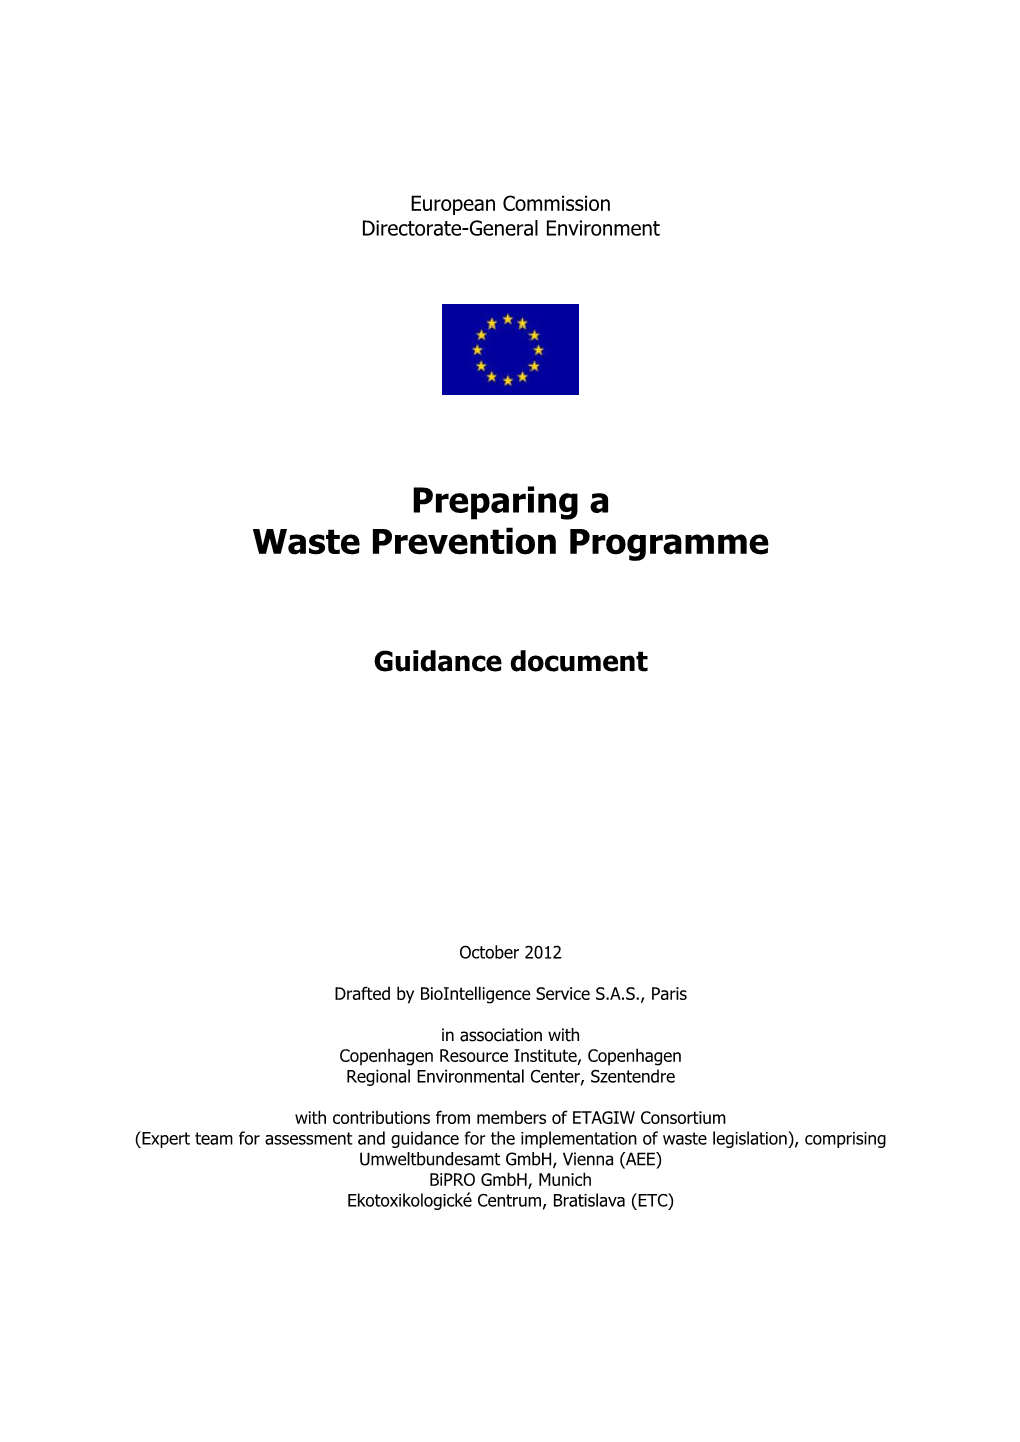 Preparing a Waste Prevention Programme